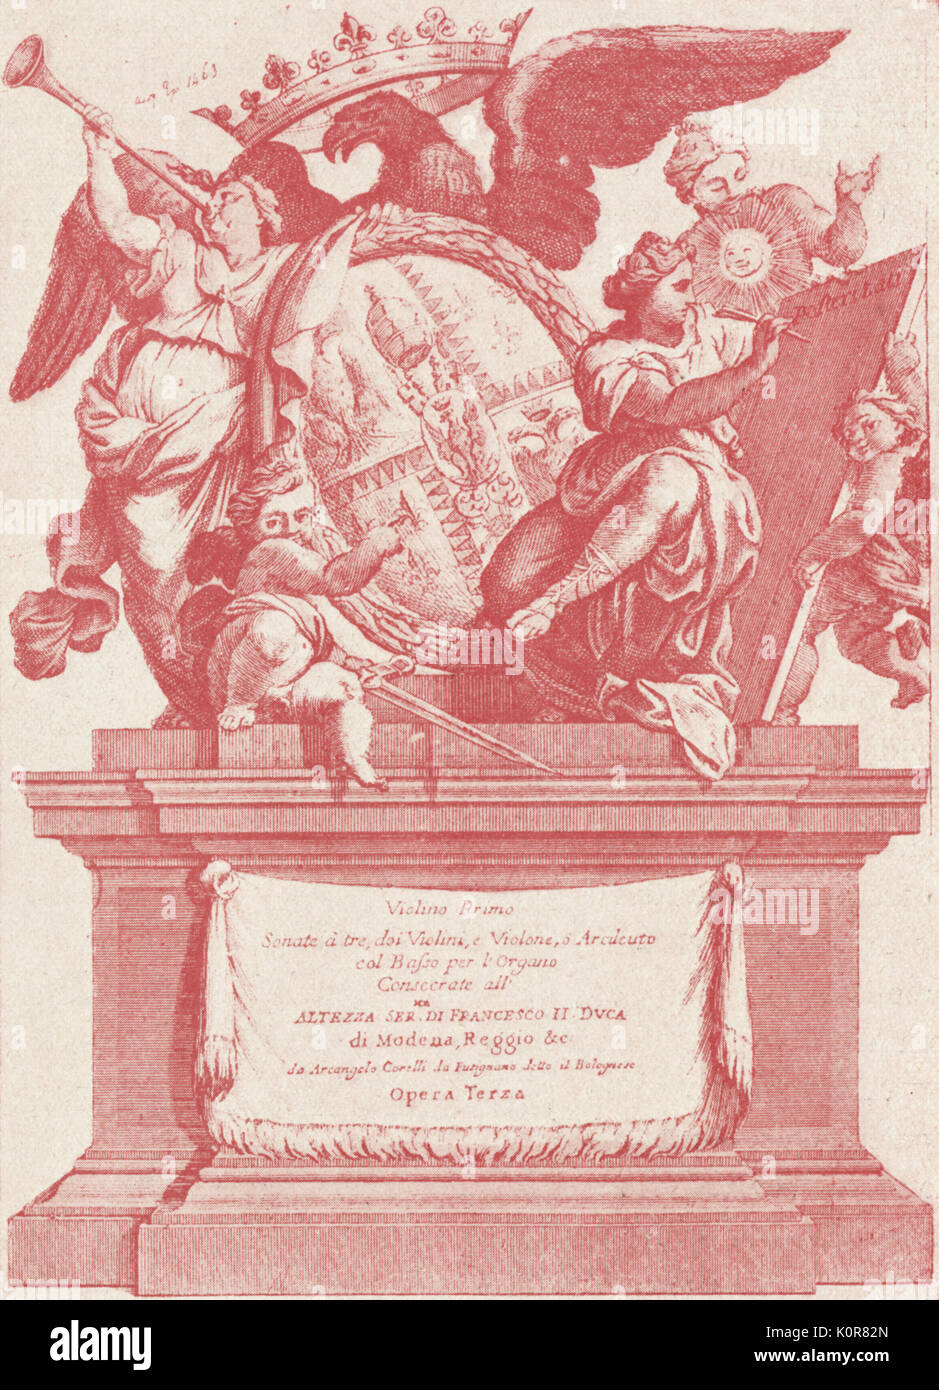 CORELLI, Arcangelo - Sonate a tre (op.3). Italian violinist and composer, 1653-1713. G.G. Komarek, Rome 1689 Stock Photo